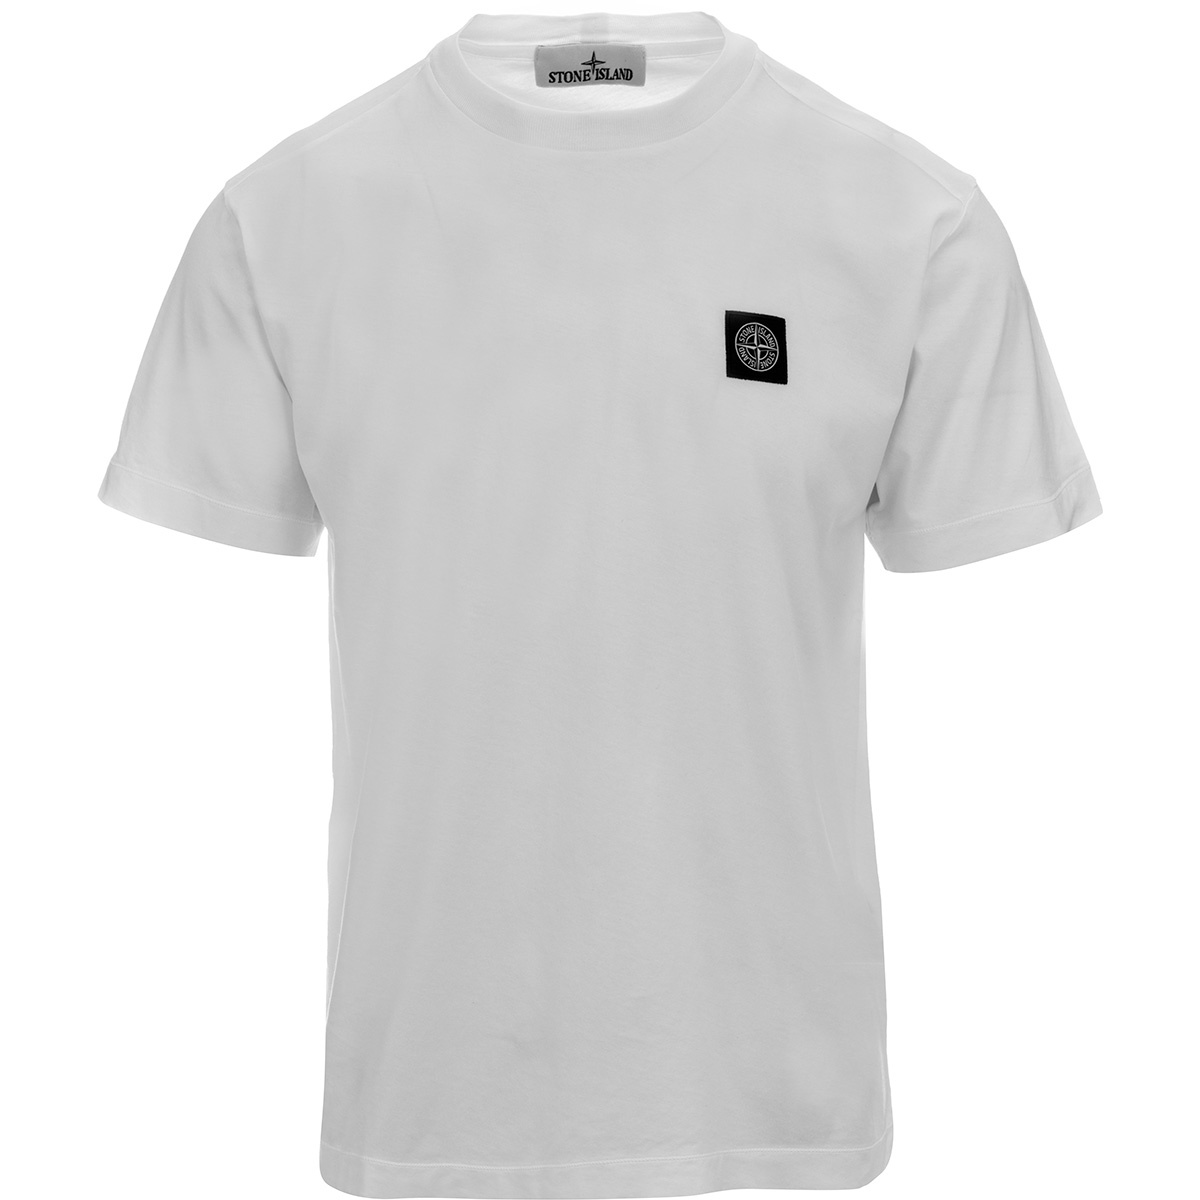 STONE ISLAND - T-shirt white - S | Oberrauch Zitt